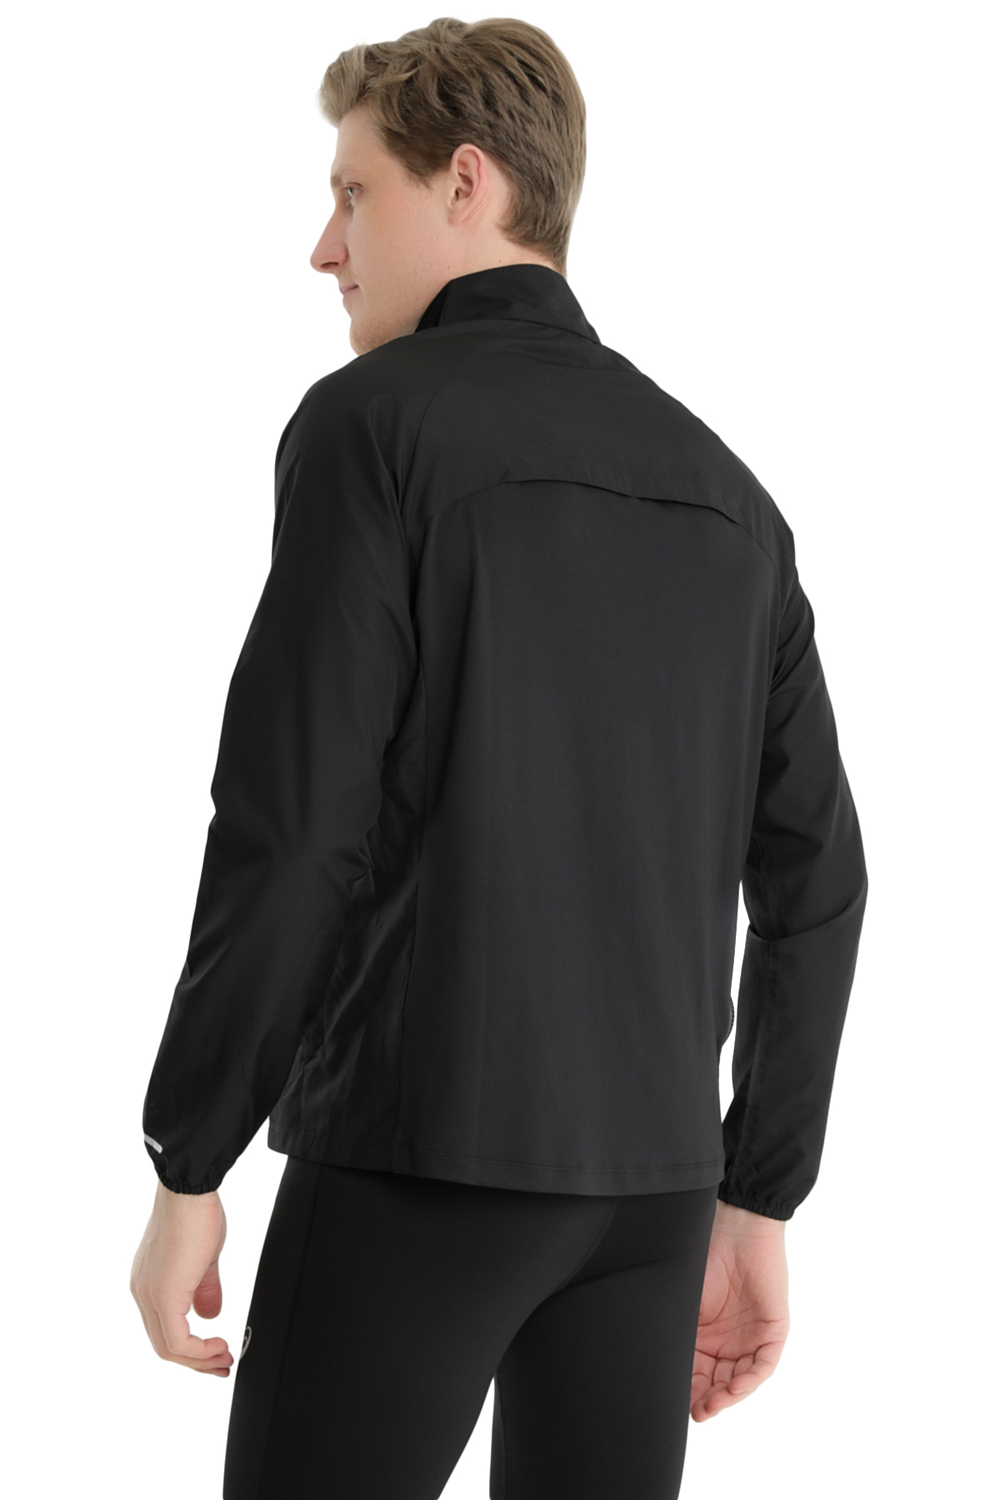 Куртка беговая Asics Icon Performance Black/Carrier Grey